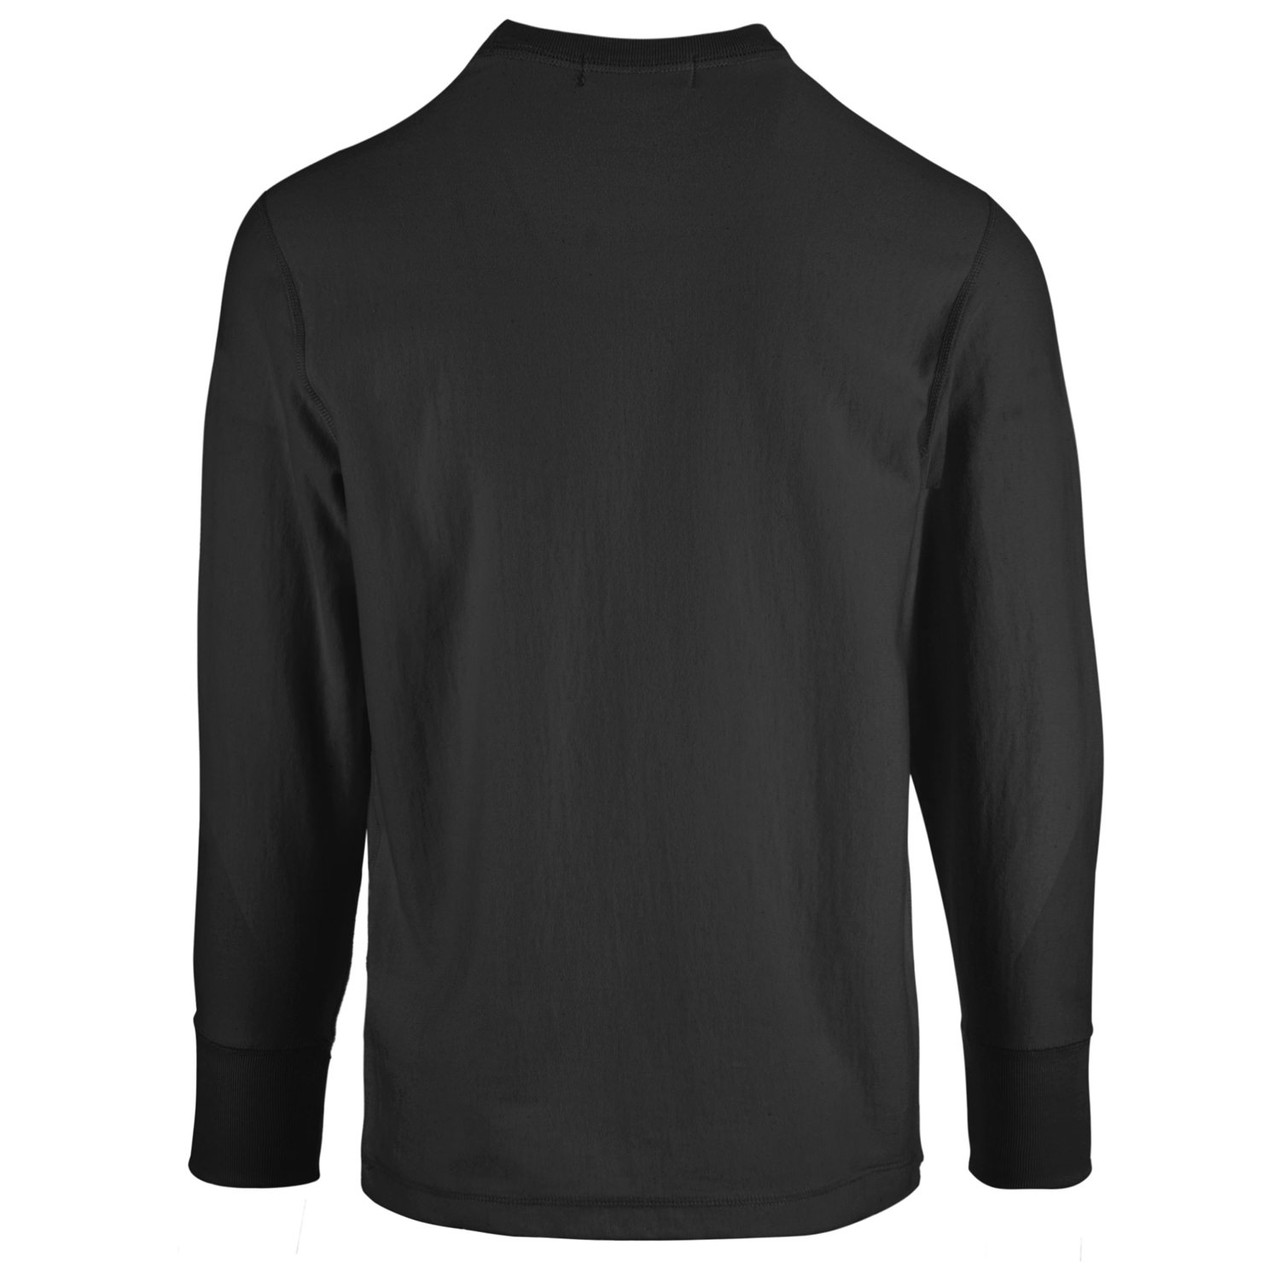 Super Heavy T-Shirt Long Sleeve 100% Cotton Black